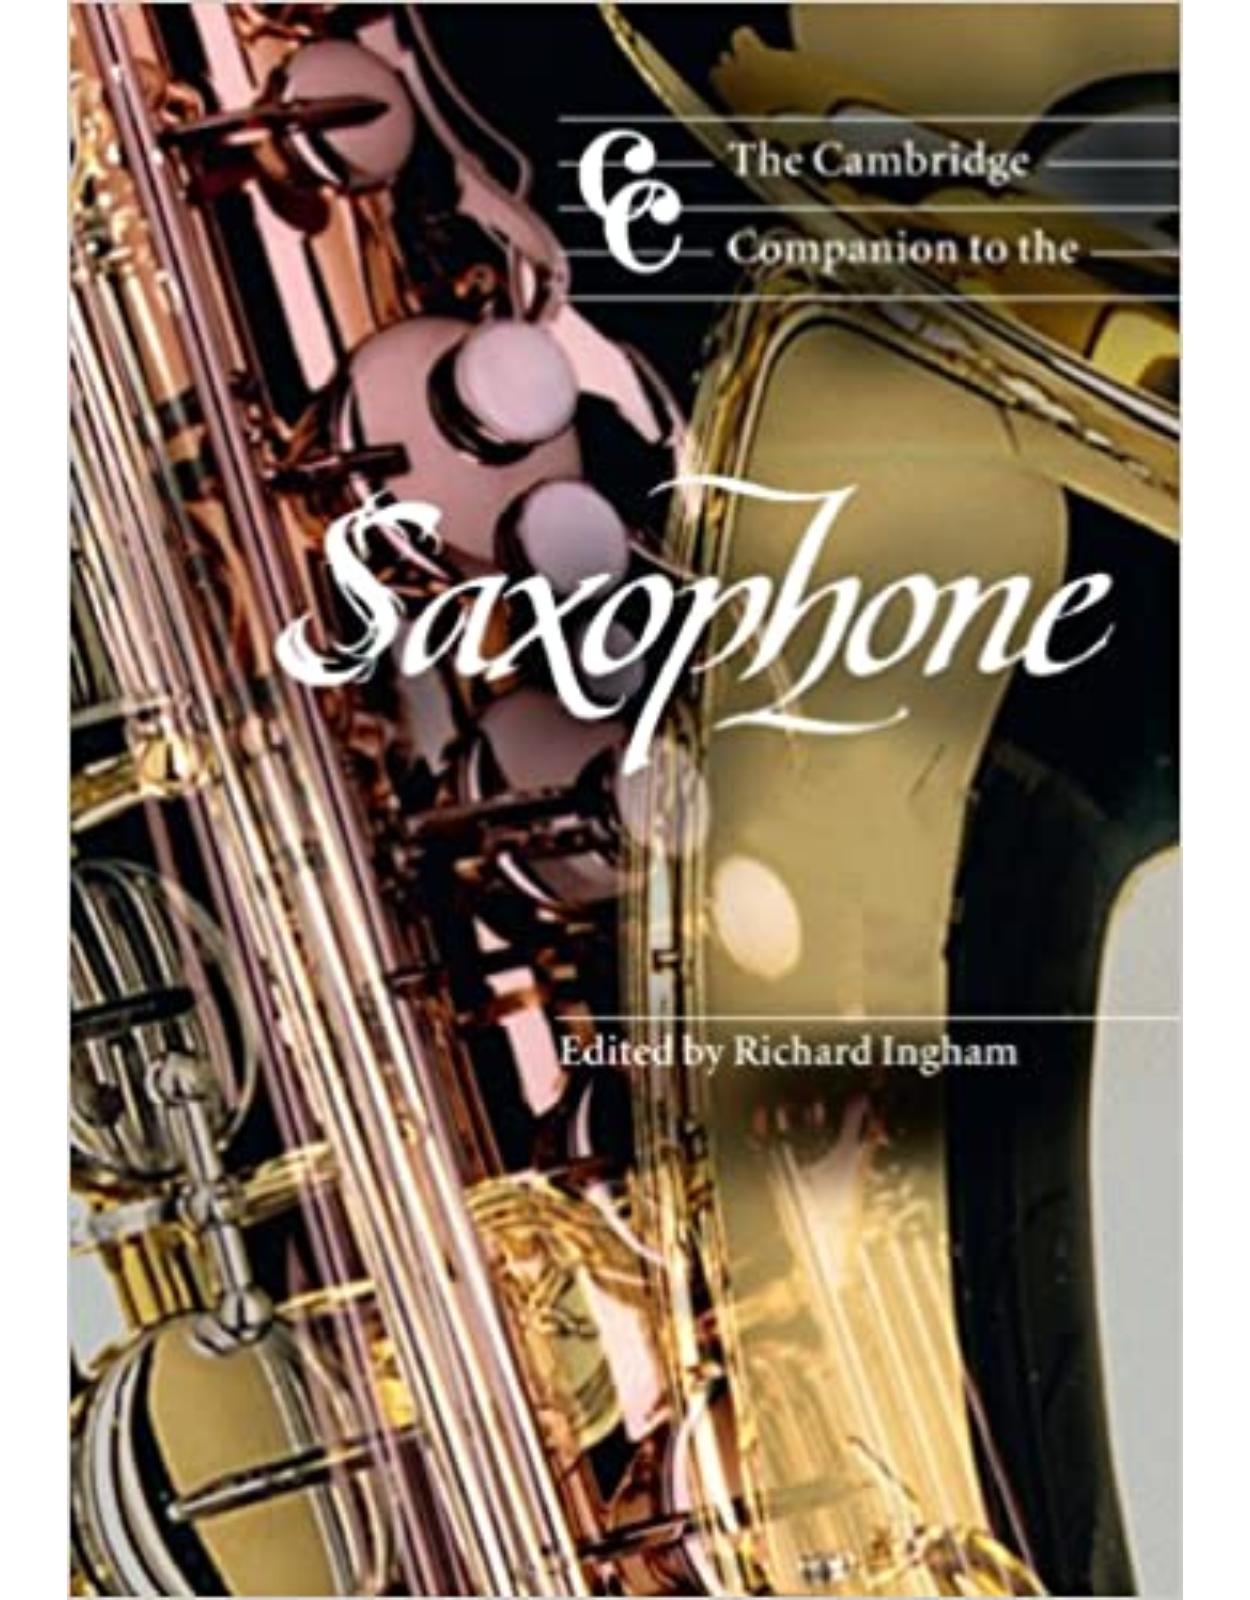 The Cambridge Companion to the Saxophone (Cambridge Companions to Music)